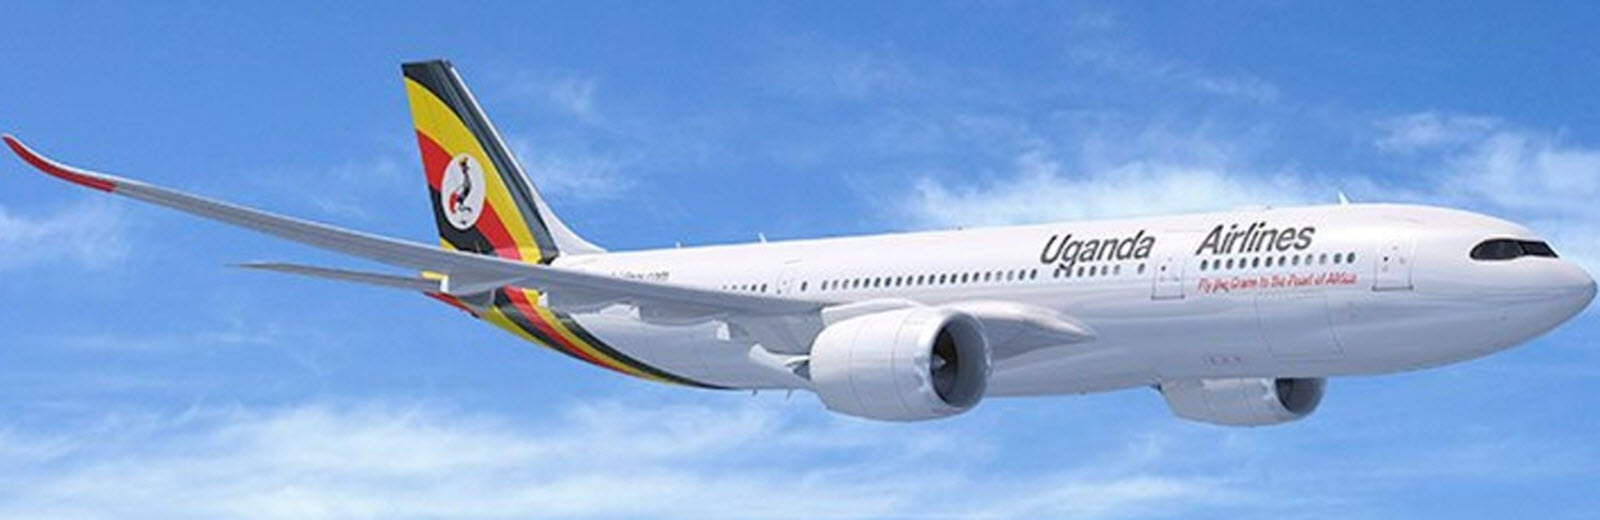 uganda airlines crj9 aircraft plane